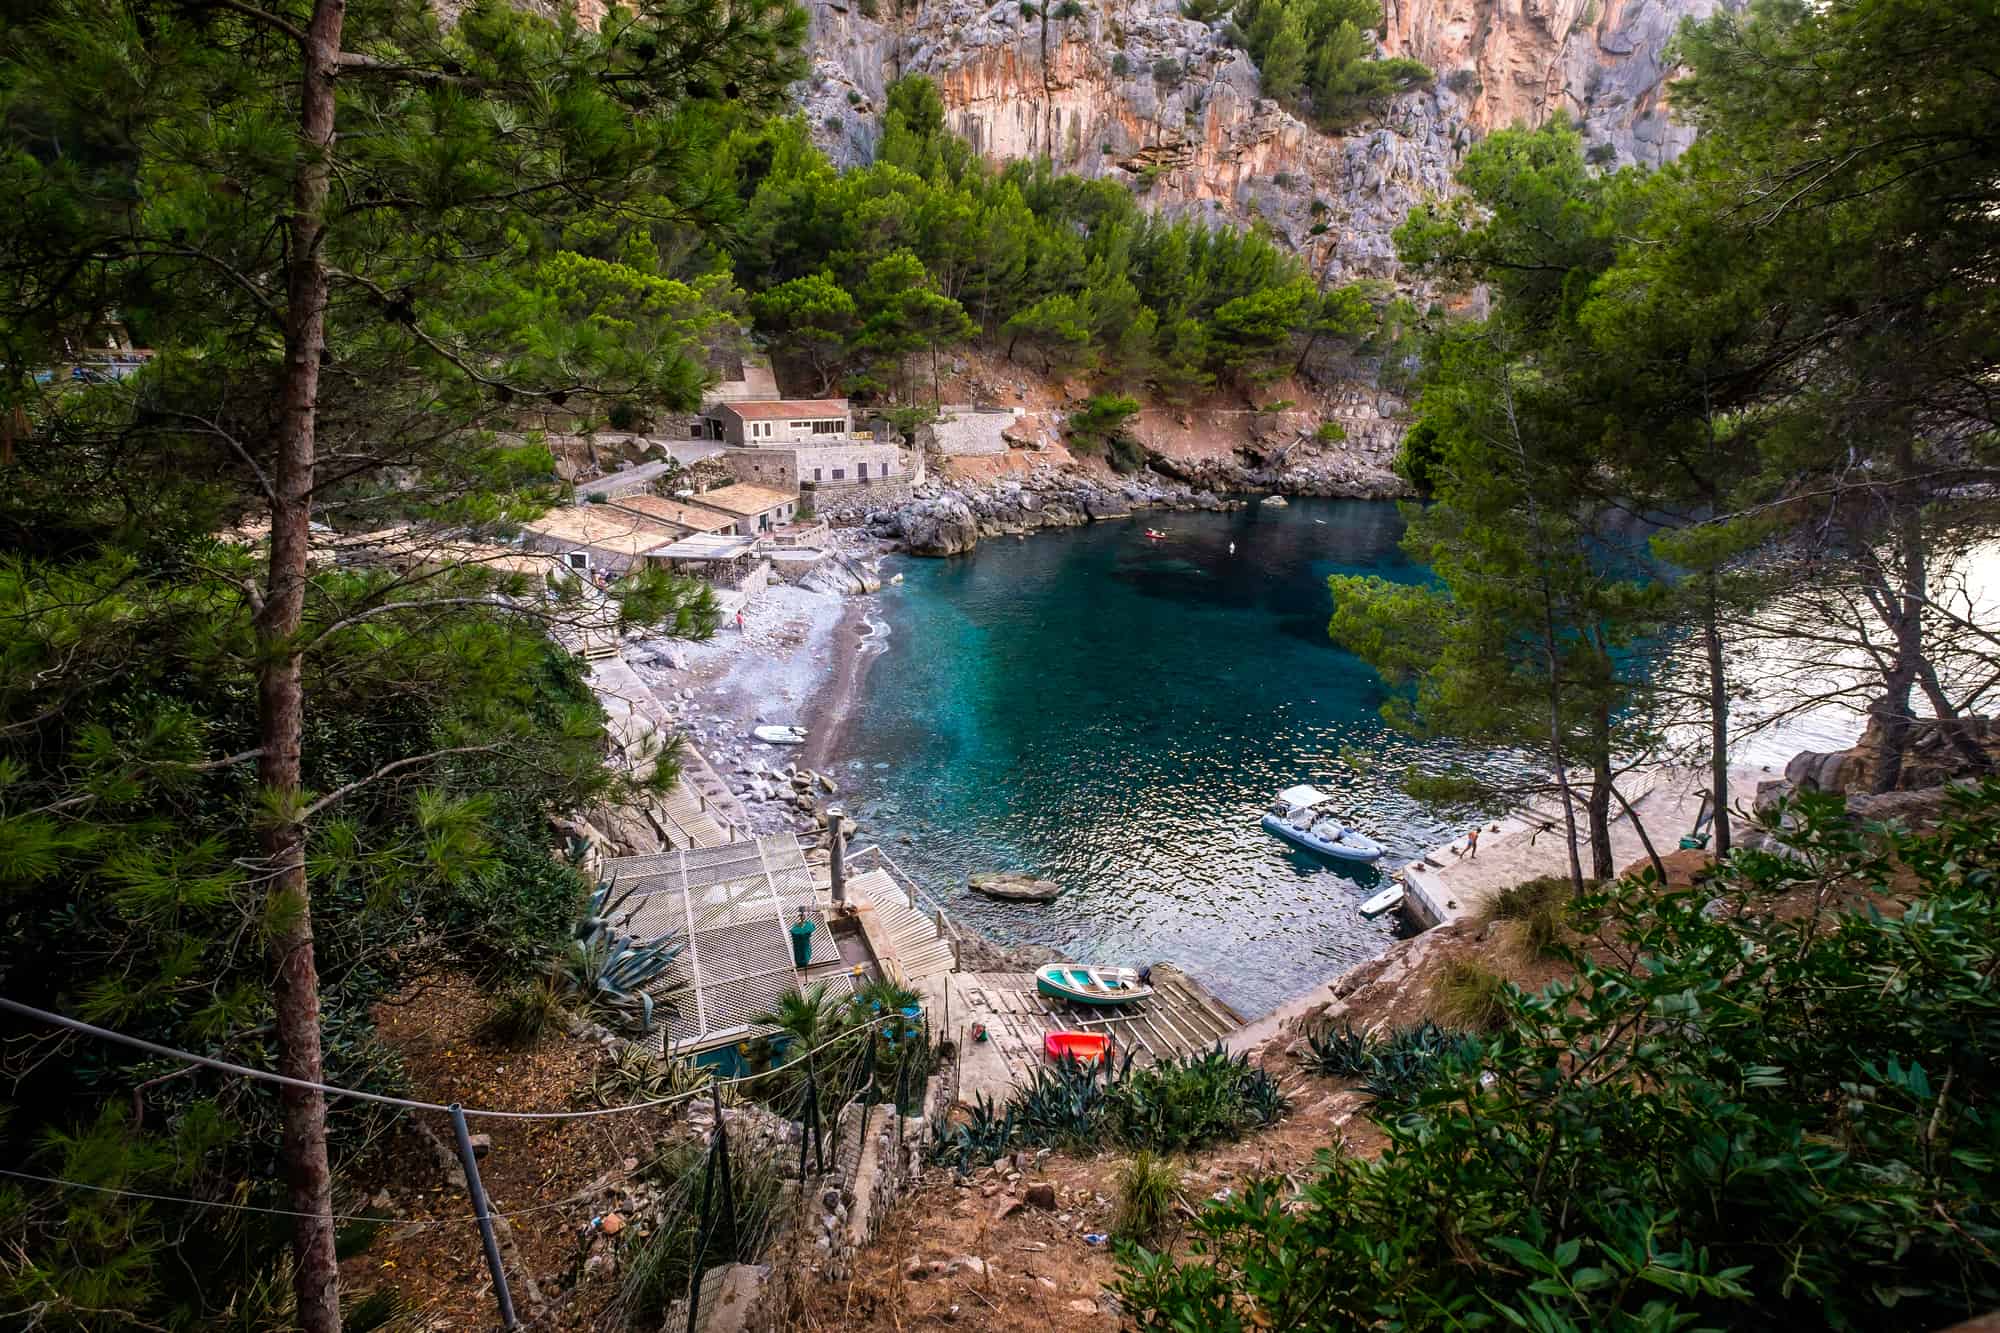 Greetings from Sa Calobra in Mallorca, the beautiful island in Spain